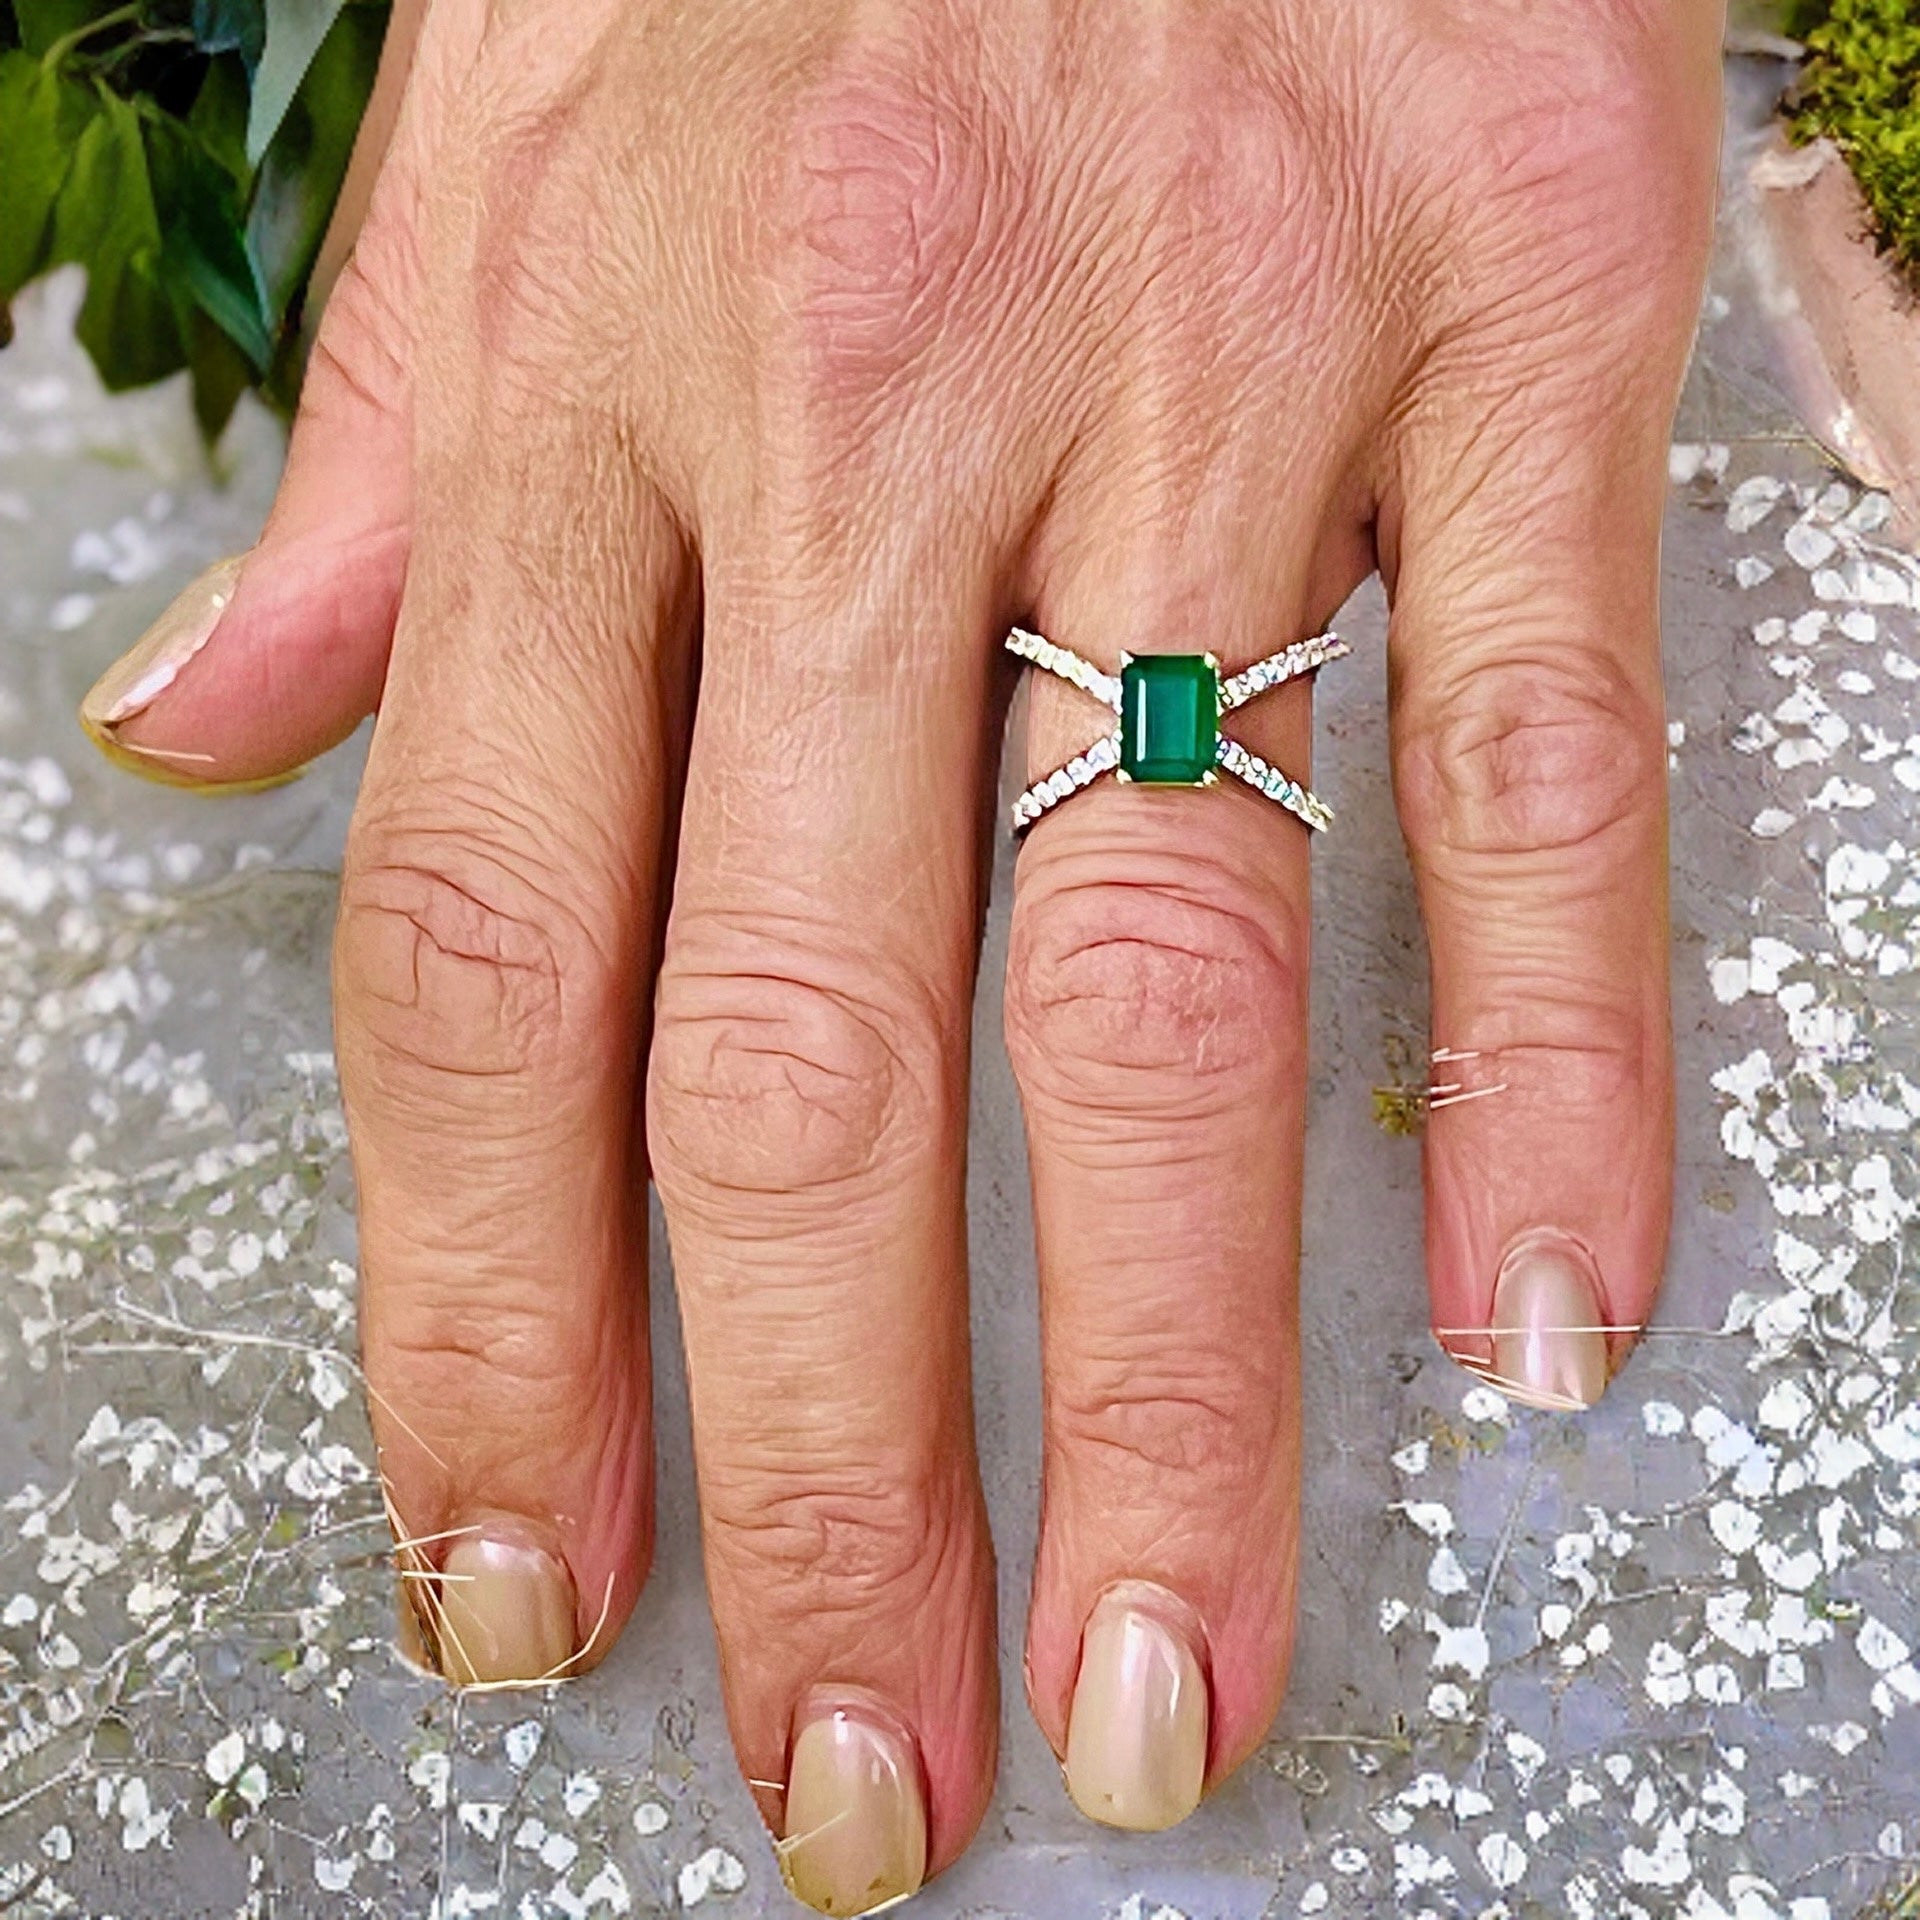 Natural Emerald Diamond Ring Size 6.5 14k W Gold 1.7 TCW Certified $4,975 217846 - Certified Fine Jewelry